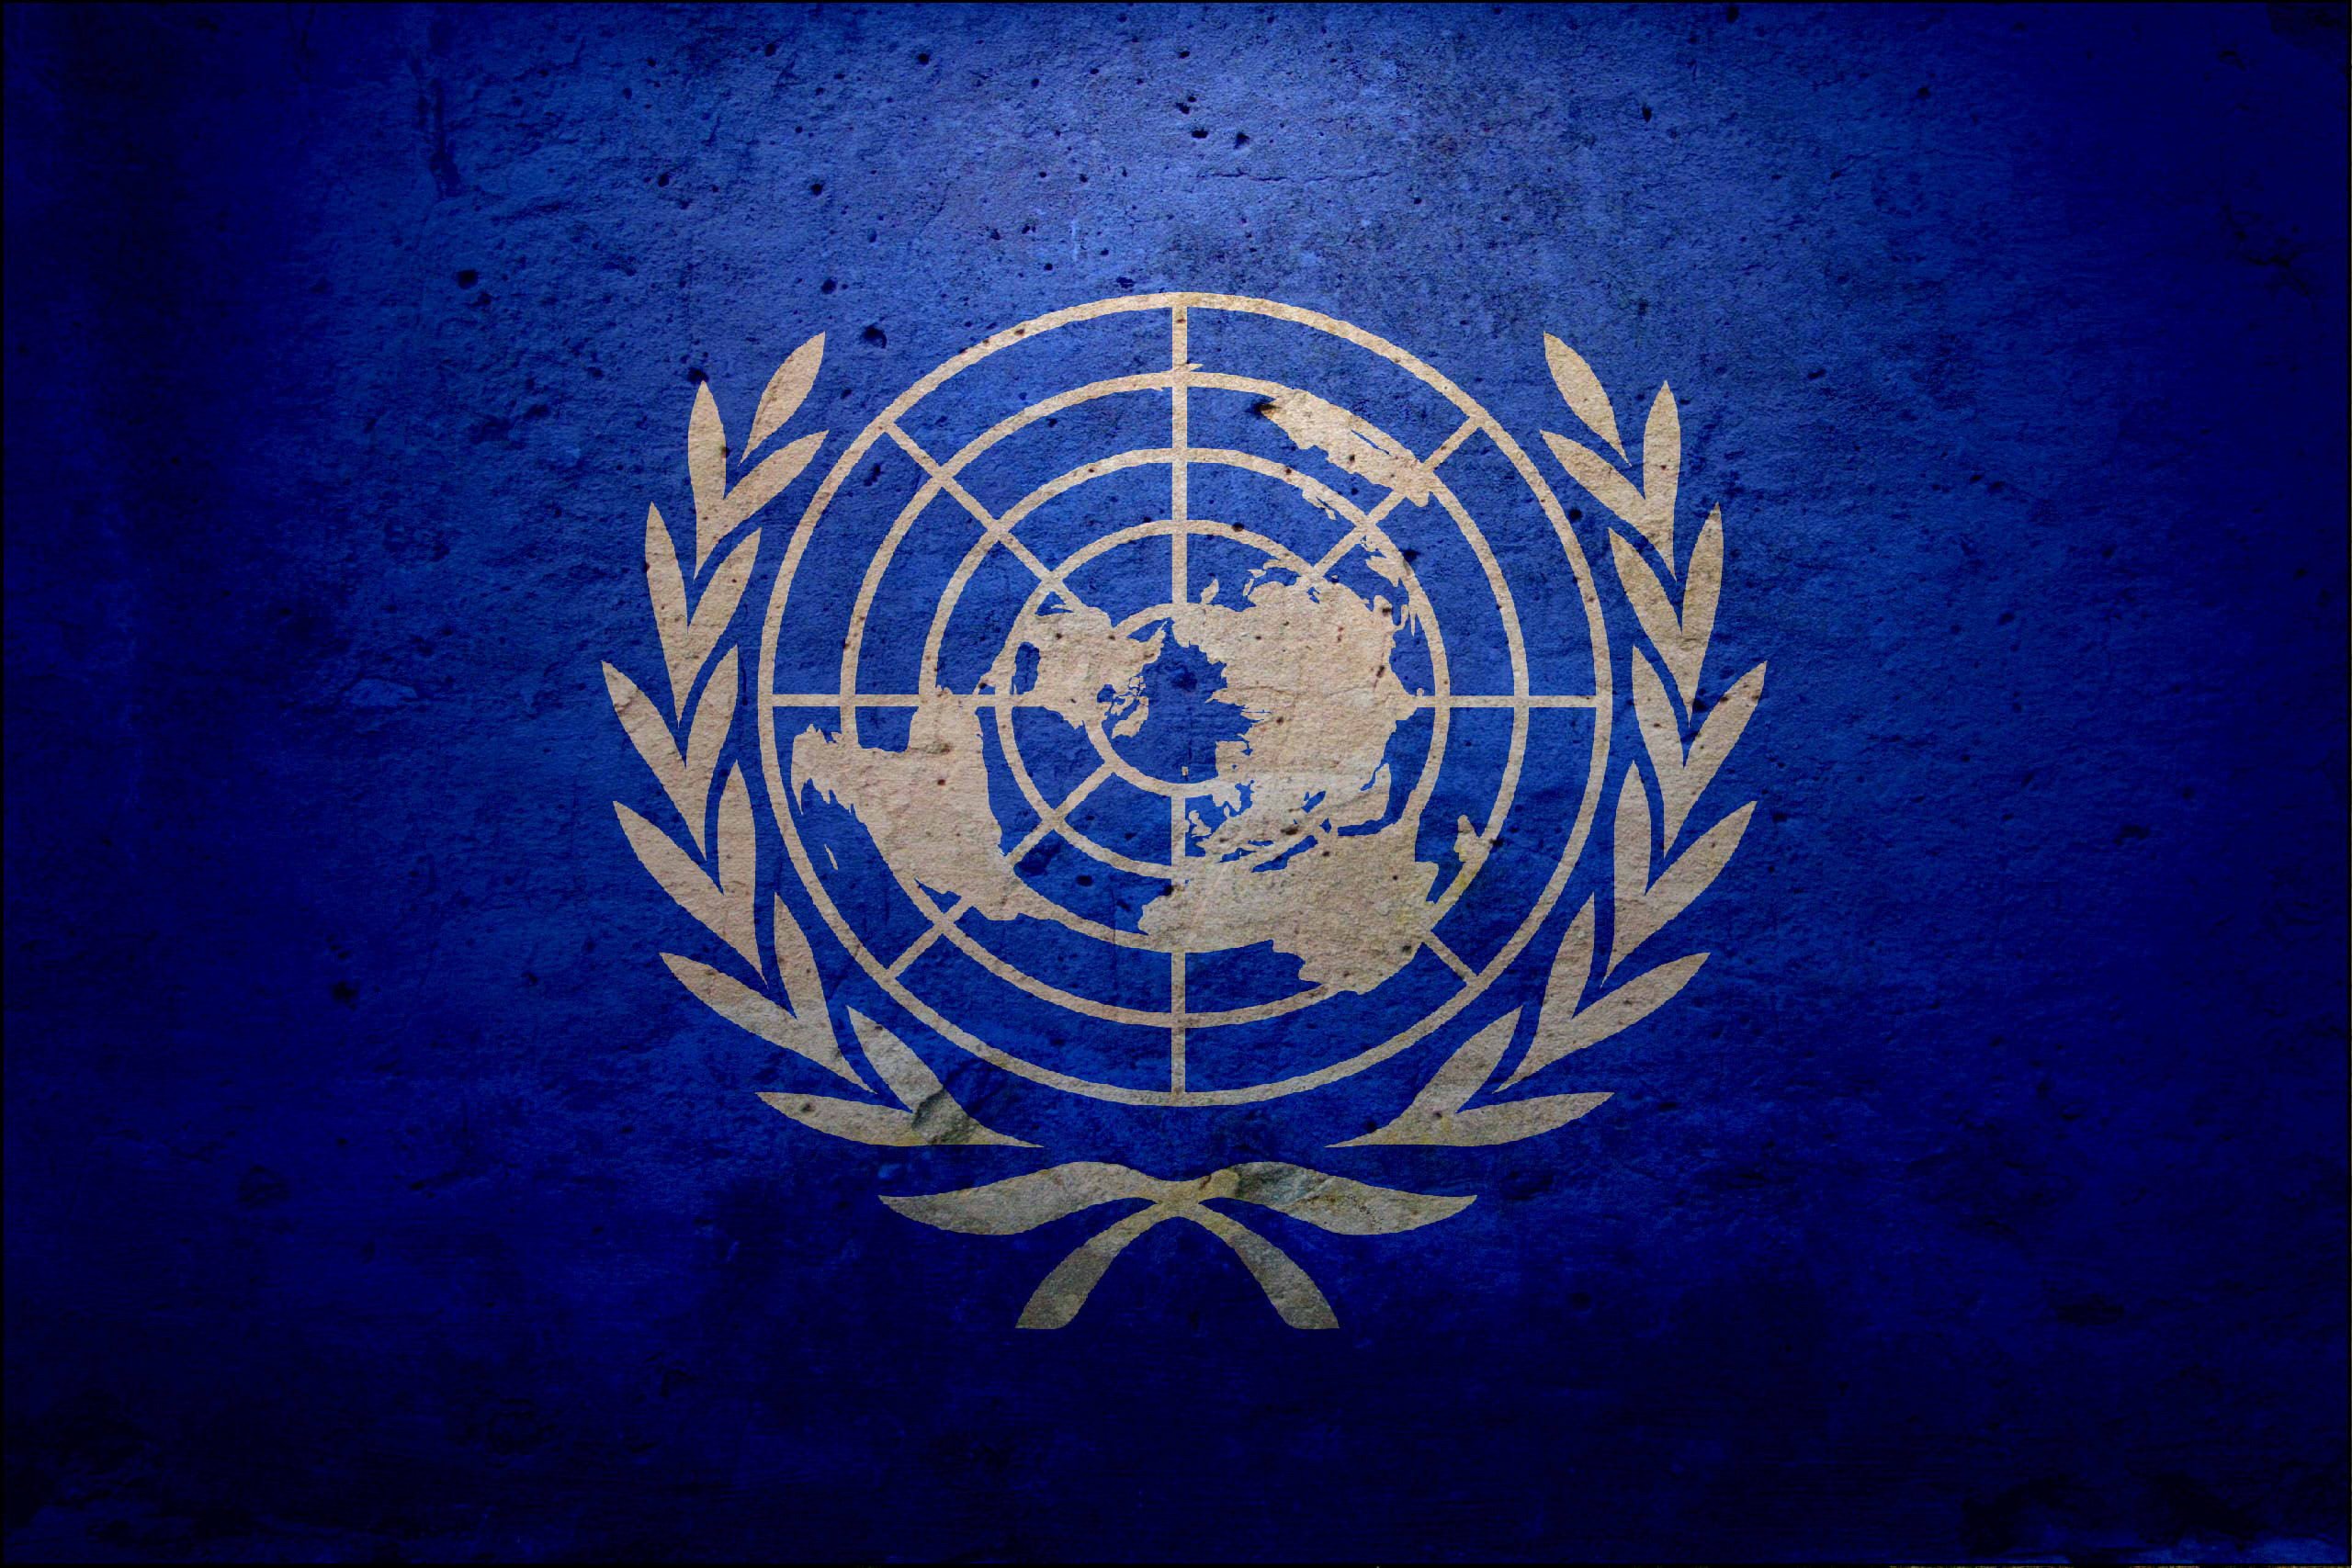 United world nation. Флаг ООН. Флаг организации Объединенных наций. Флаг ООН флаг ООН. Флаг ООН плоская земля.